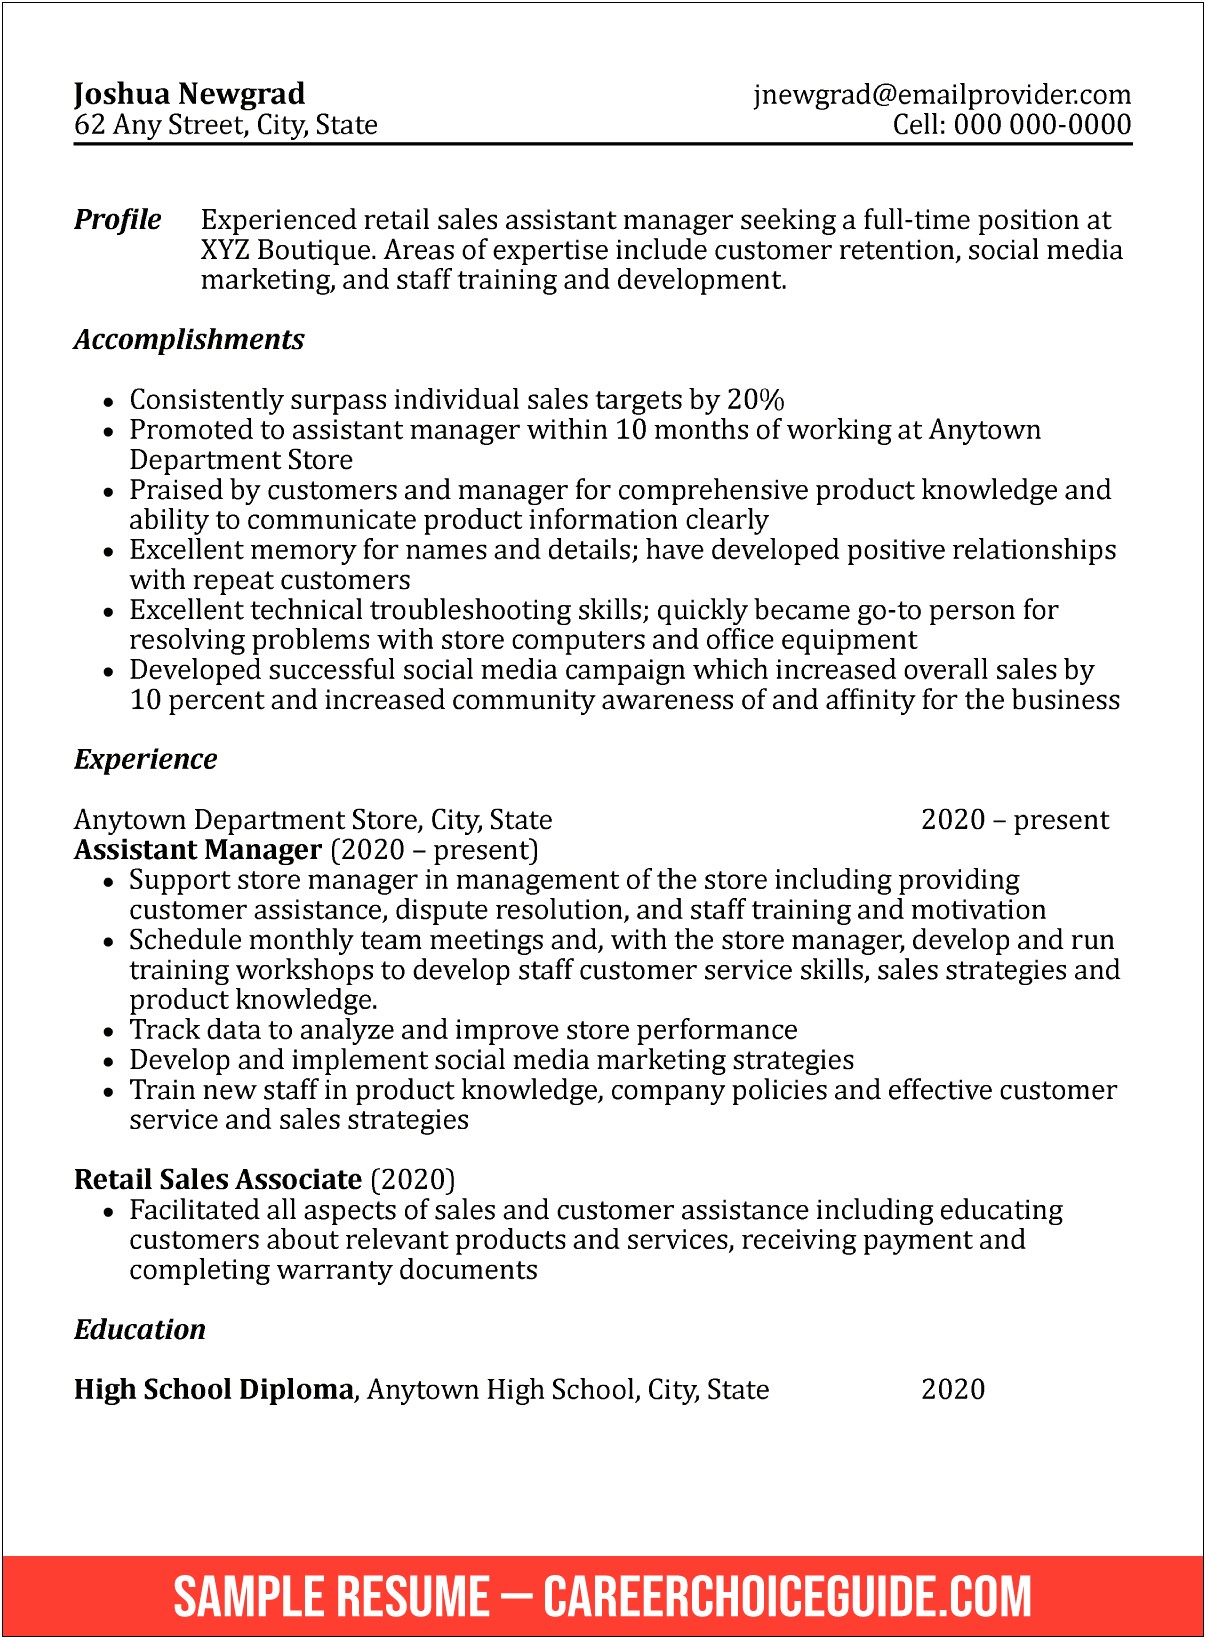 Resume Objective Sample For High School Graduate